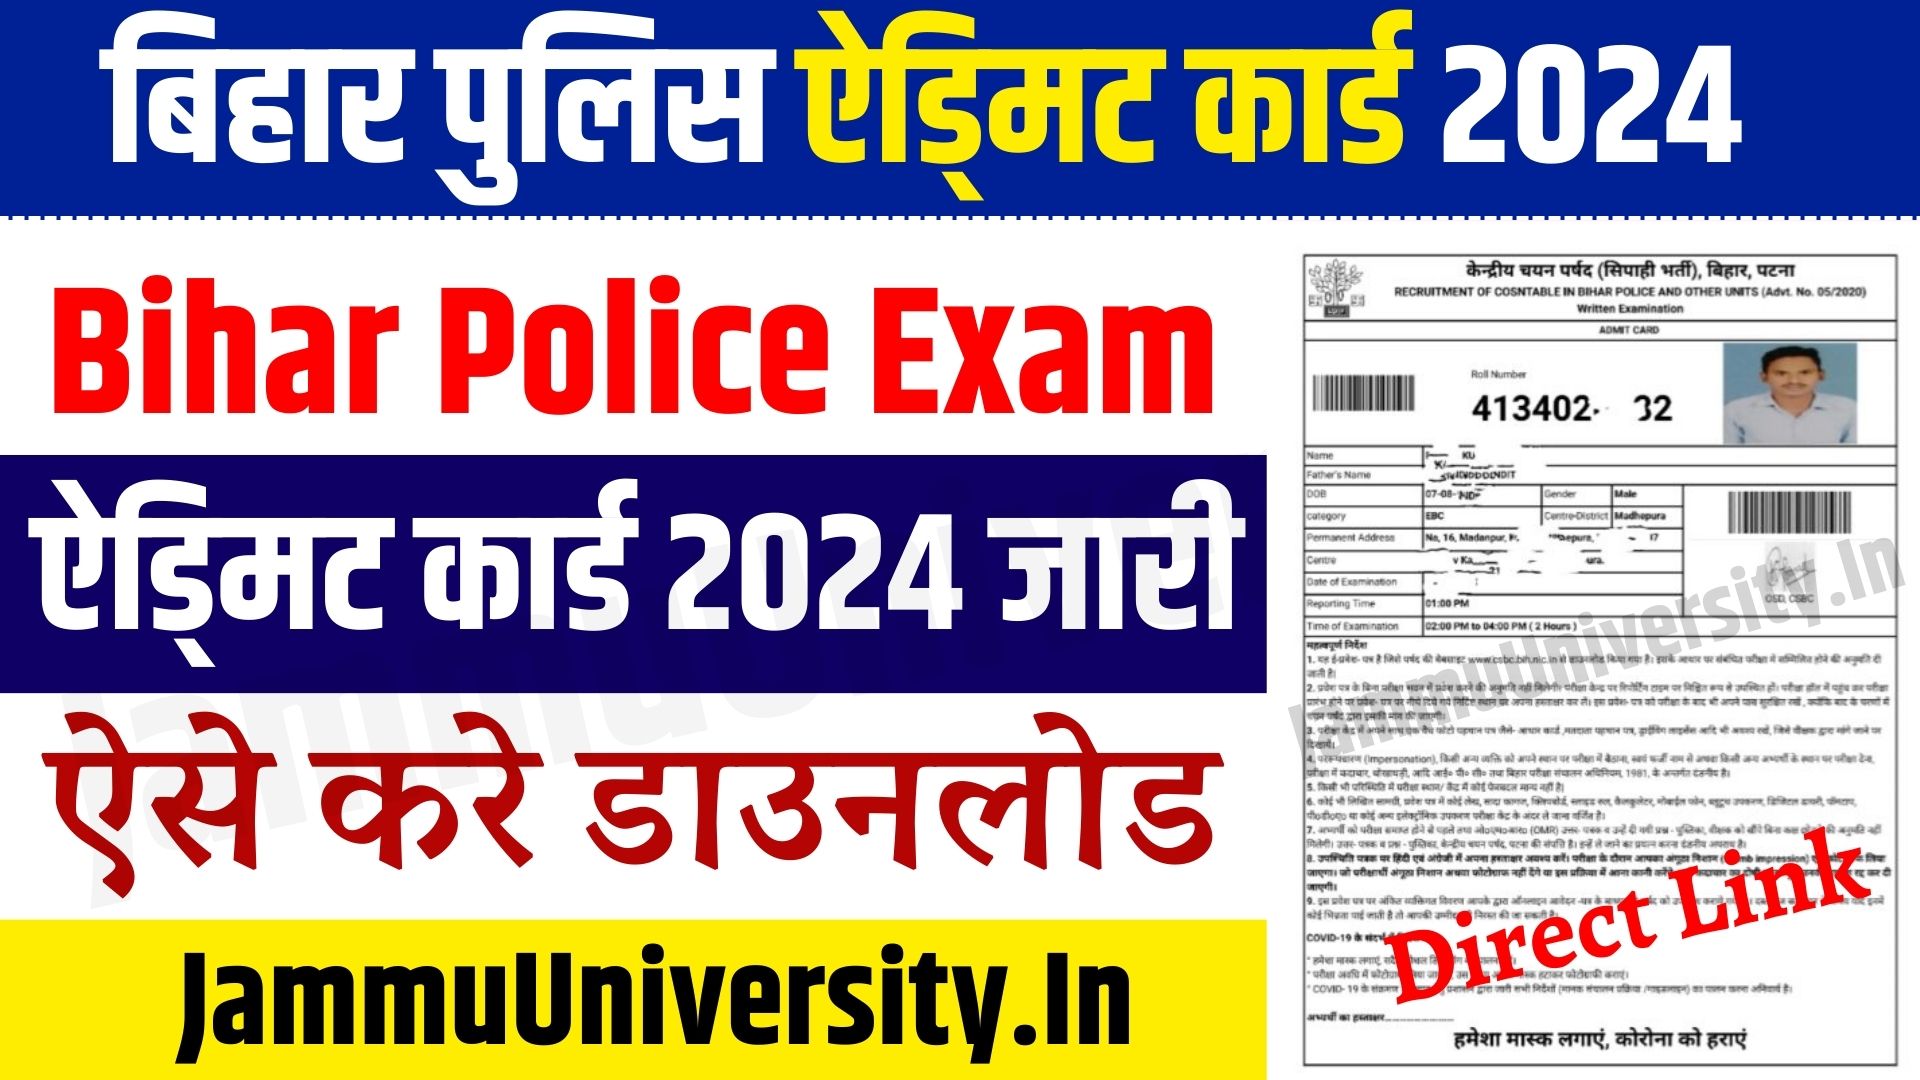 Bihar Police Admit Card 2024 Download